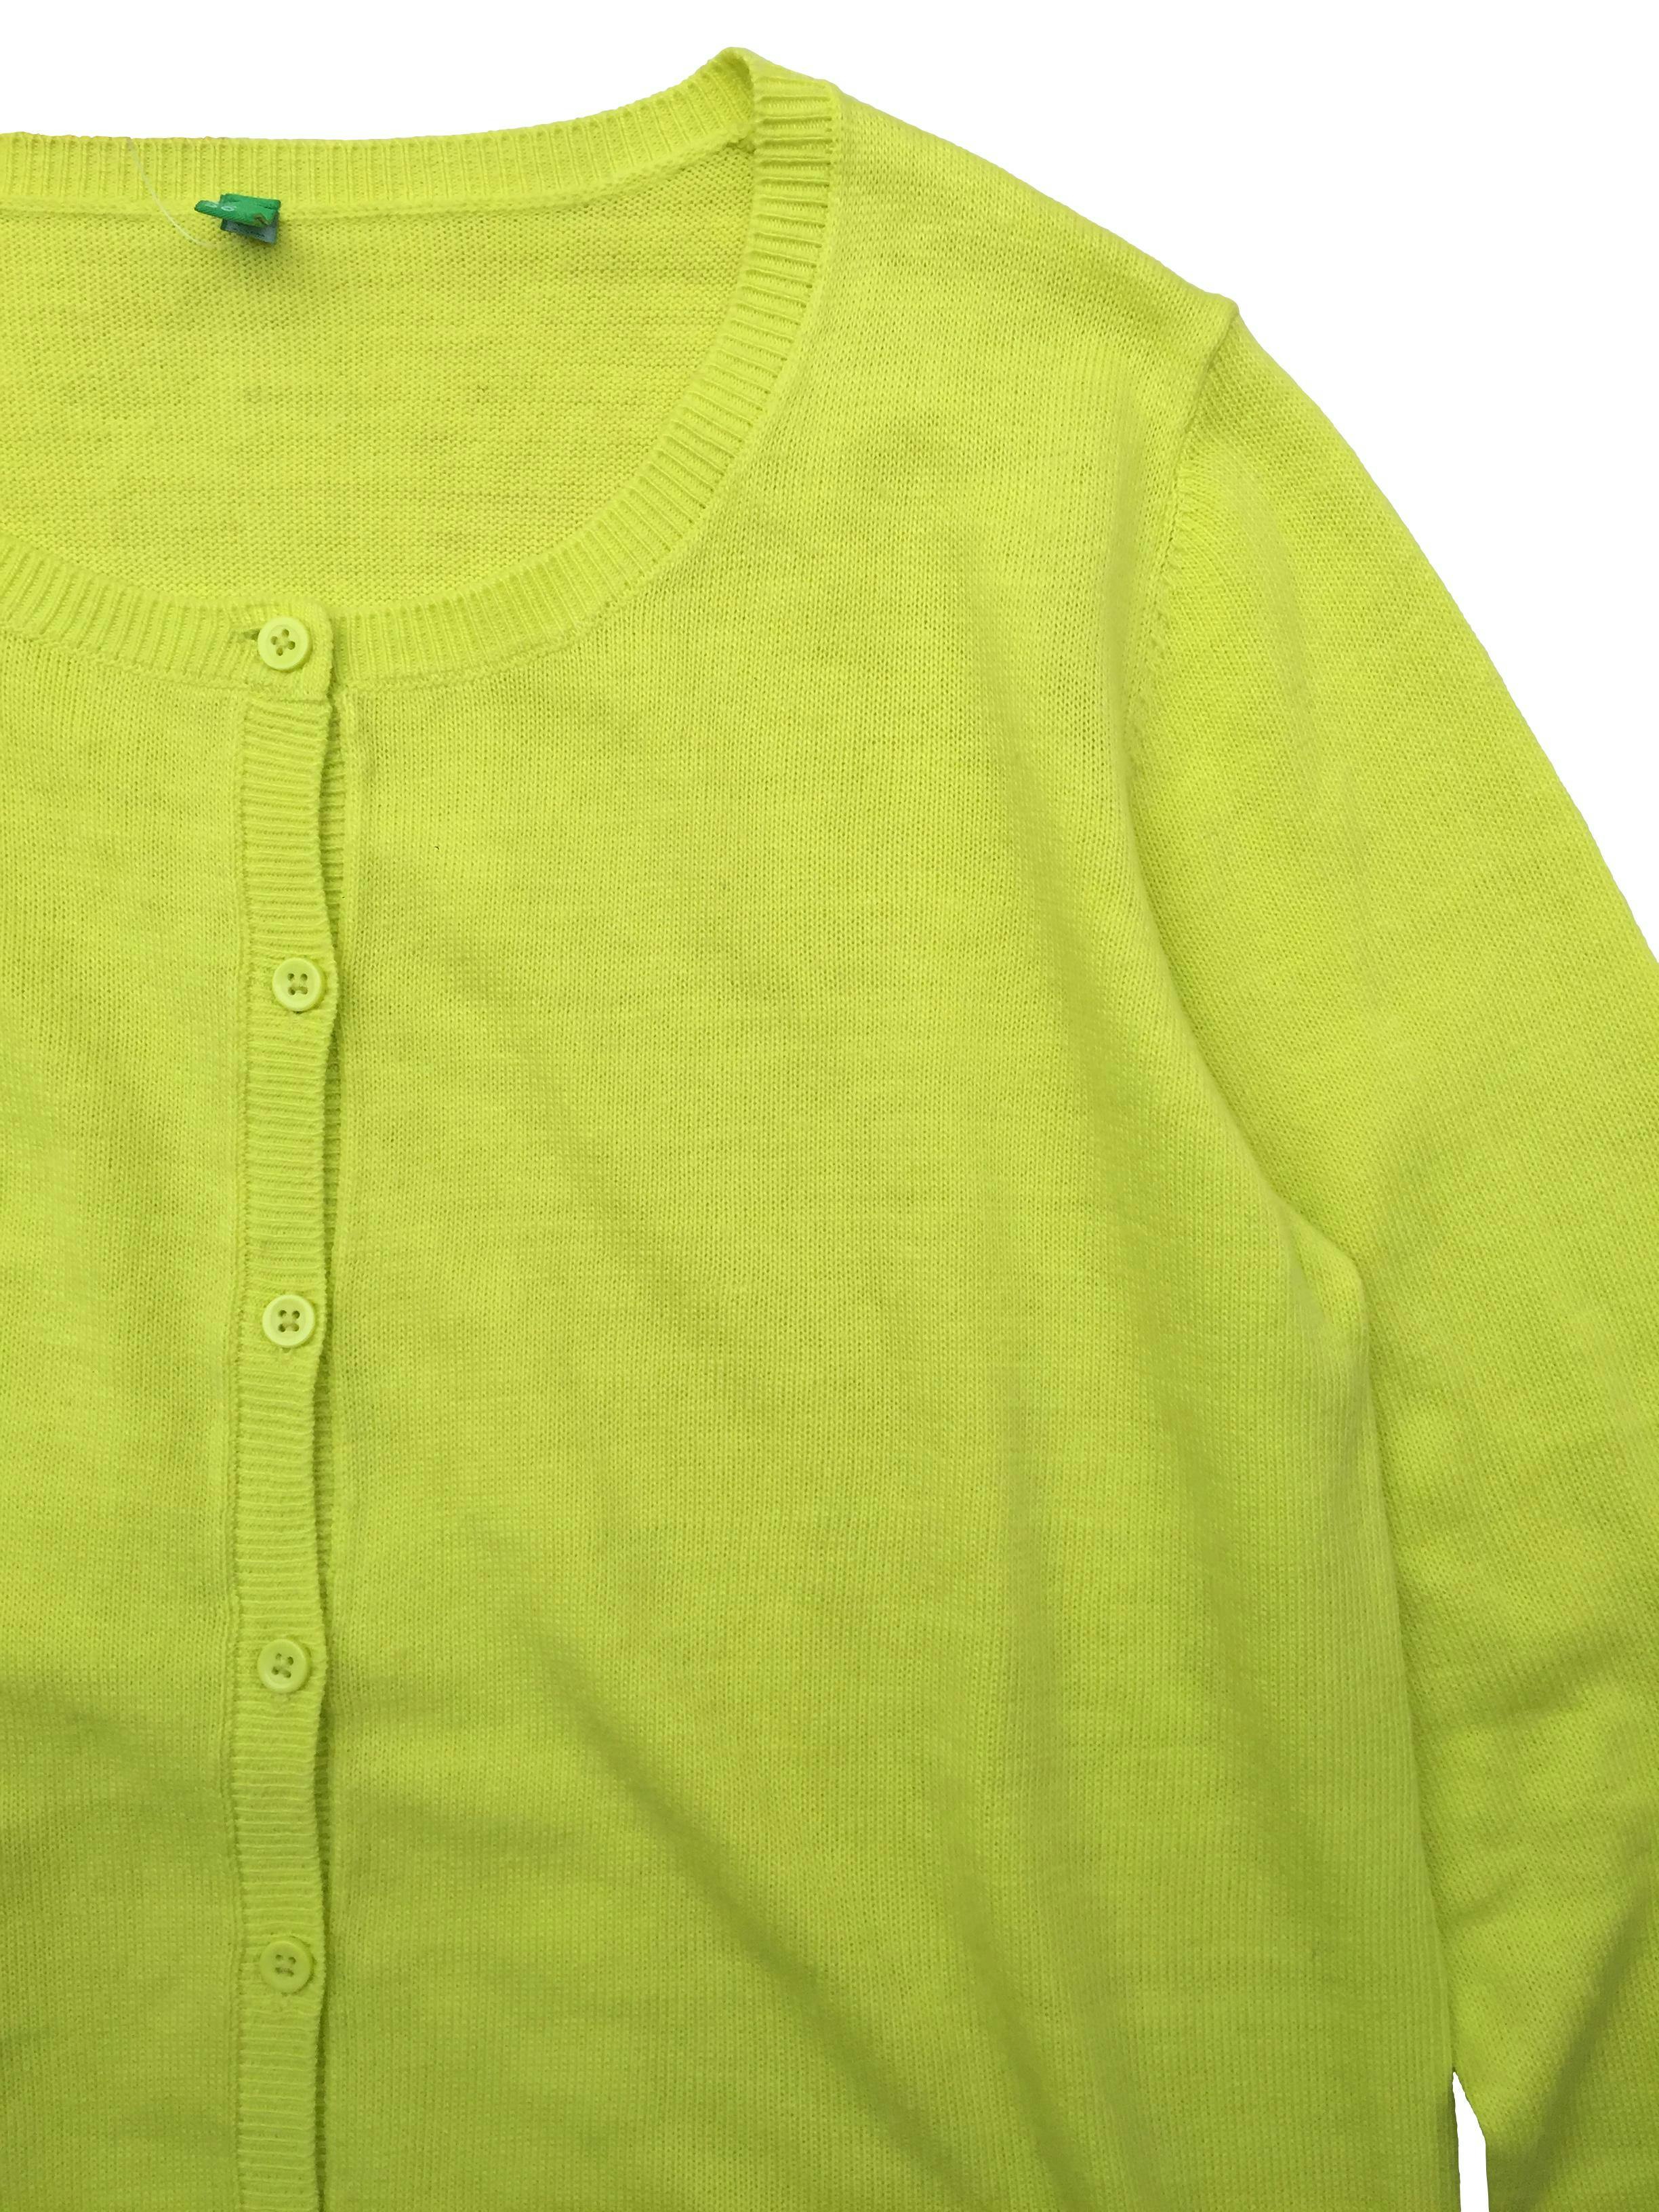 Cardigan Benetton amarillo neón, tejido delgado. Busto 90cm, Largo 60cm.